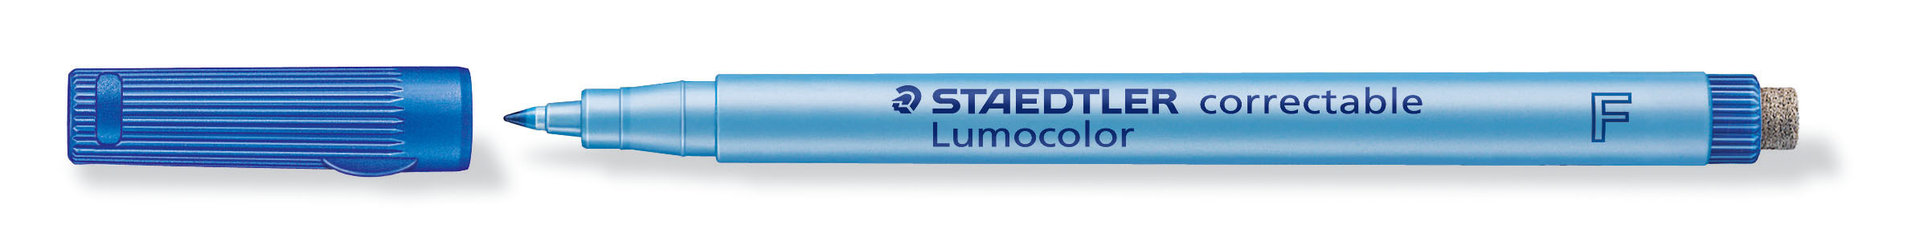 STAEDTLER Folienstift Lumocolor correct F blau, 